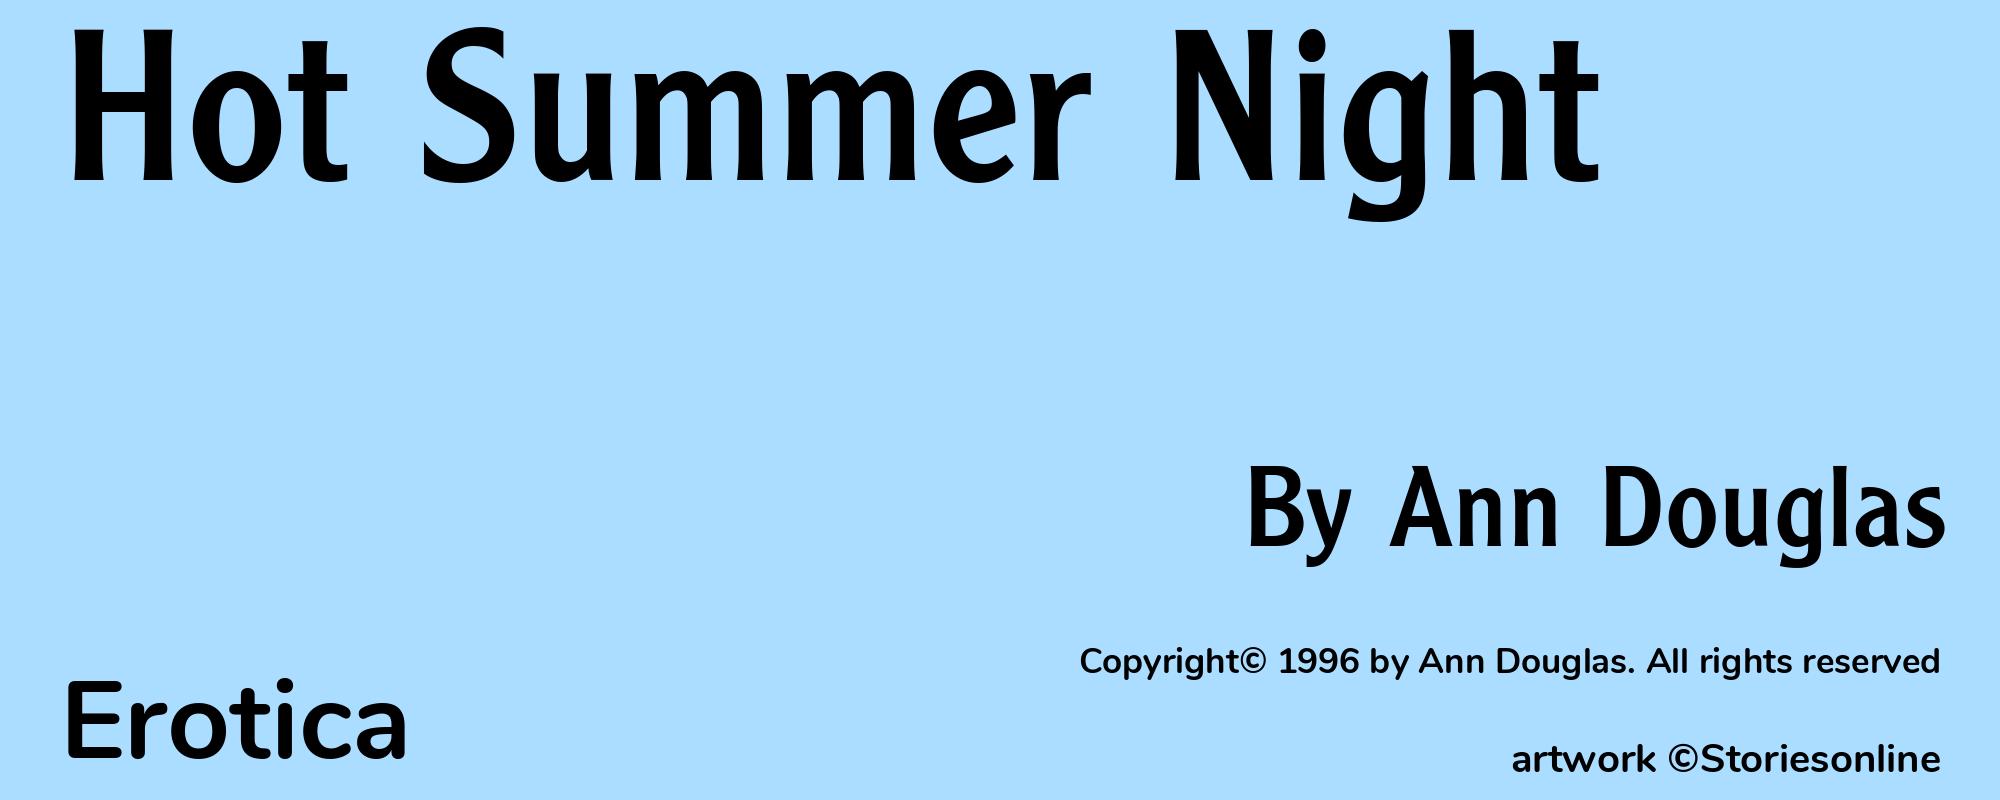 Hot Summer Night - Cover